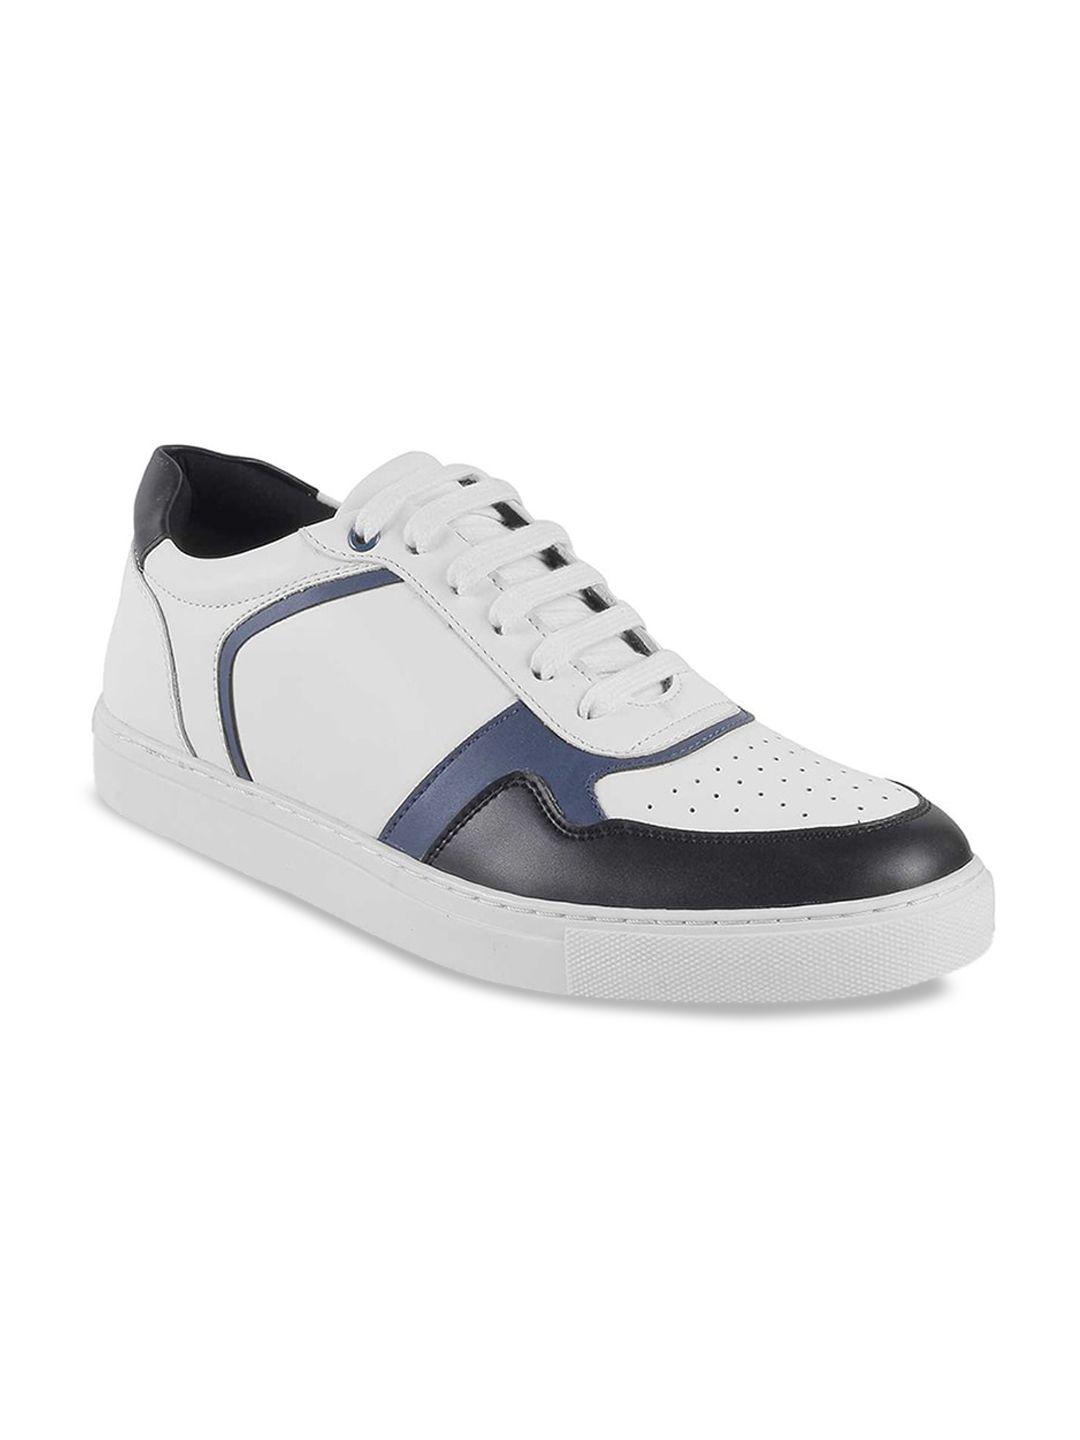 mochi-men-perforations-comfort-insole-basics-sneakers